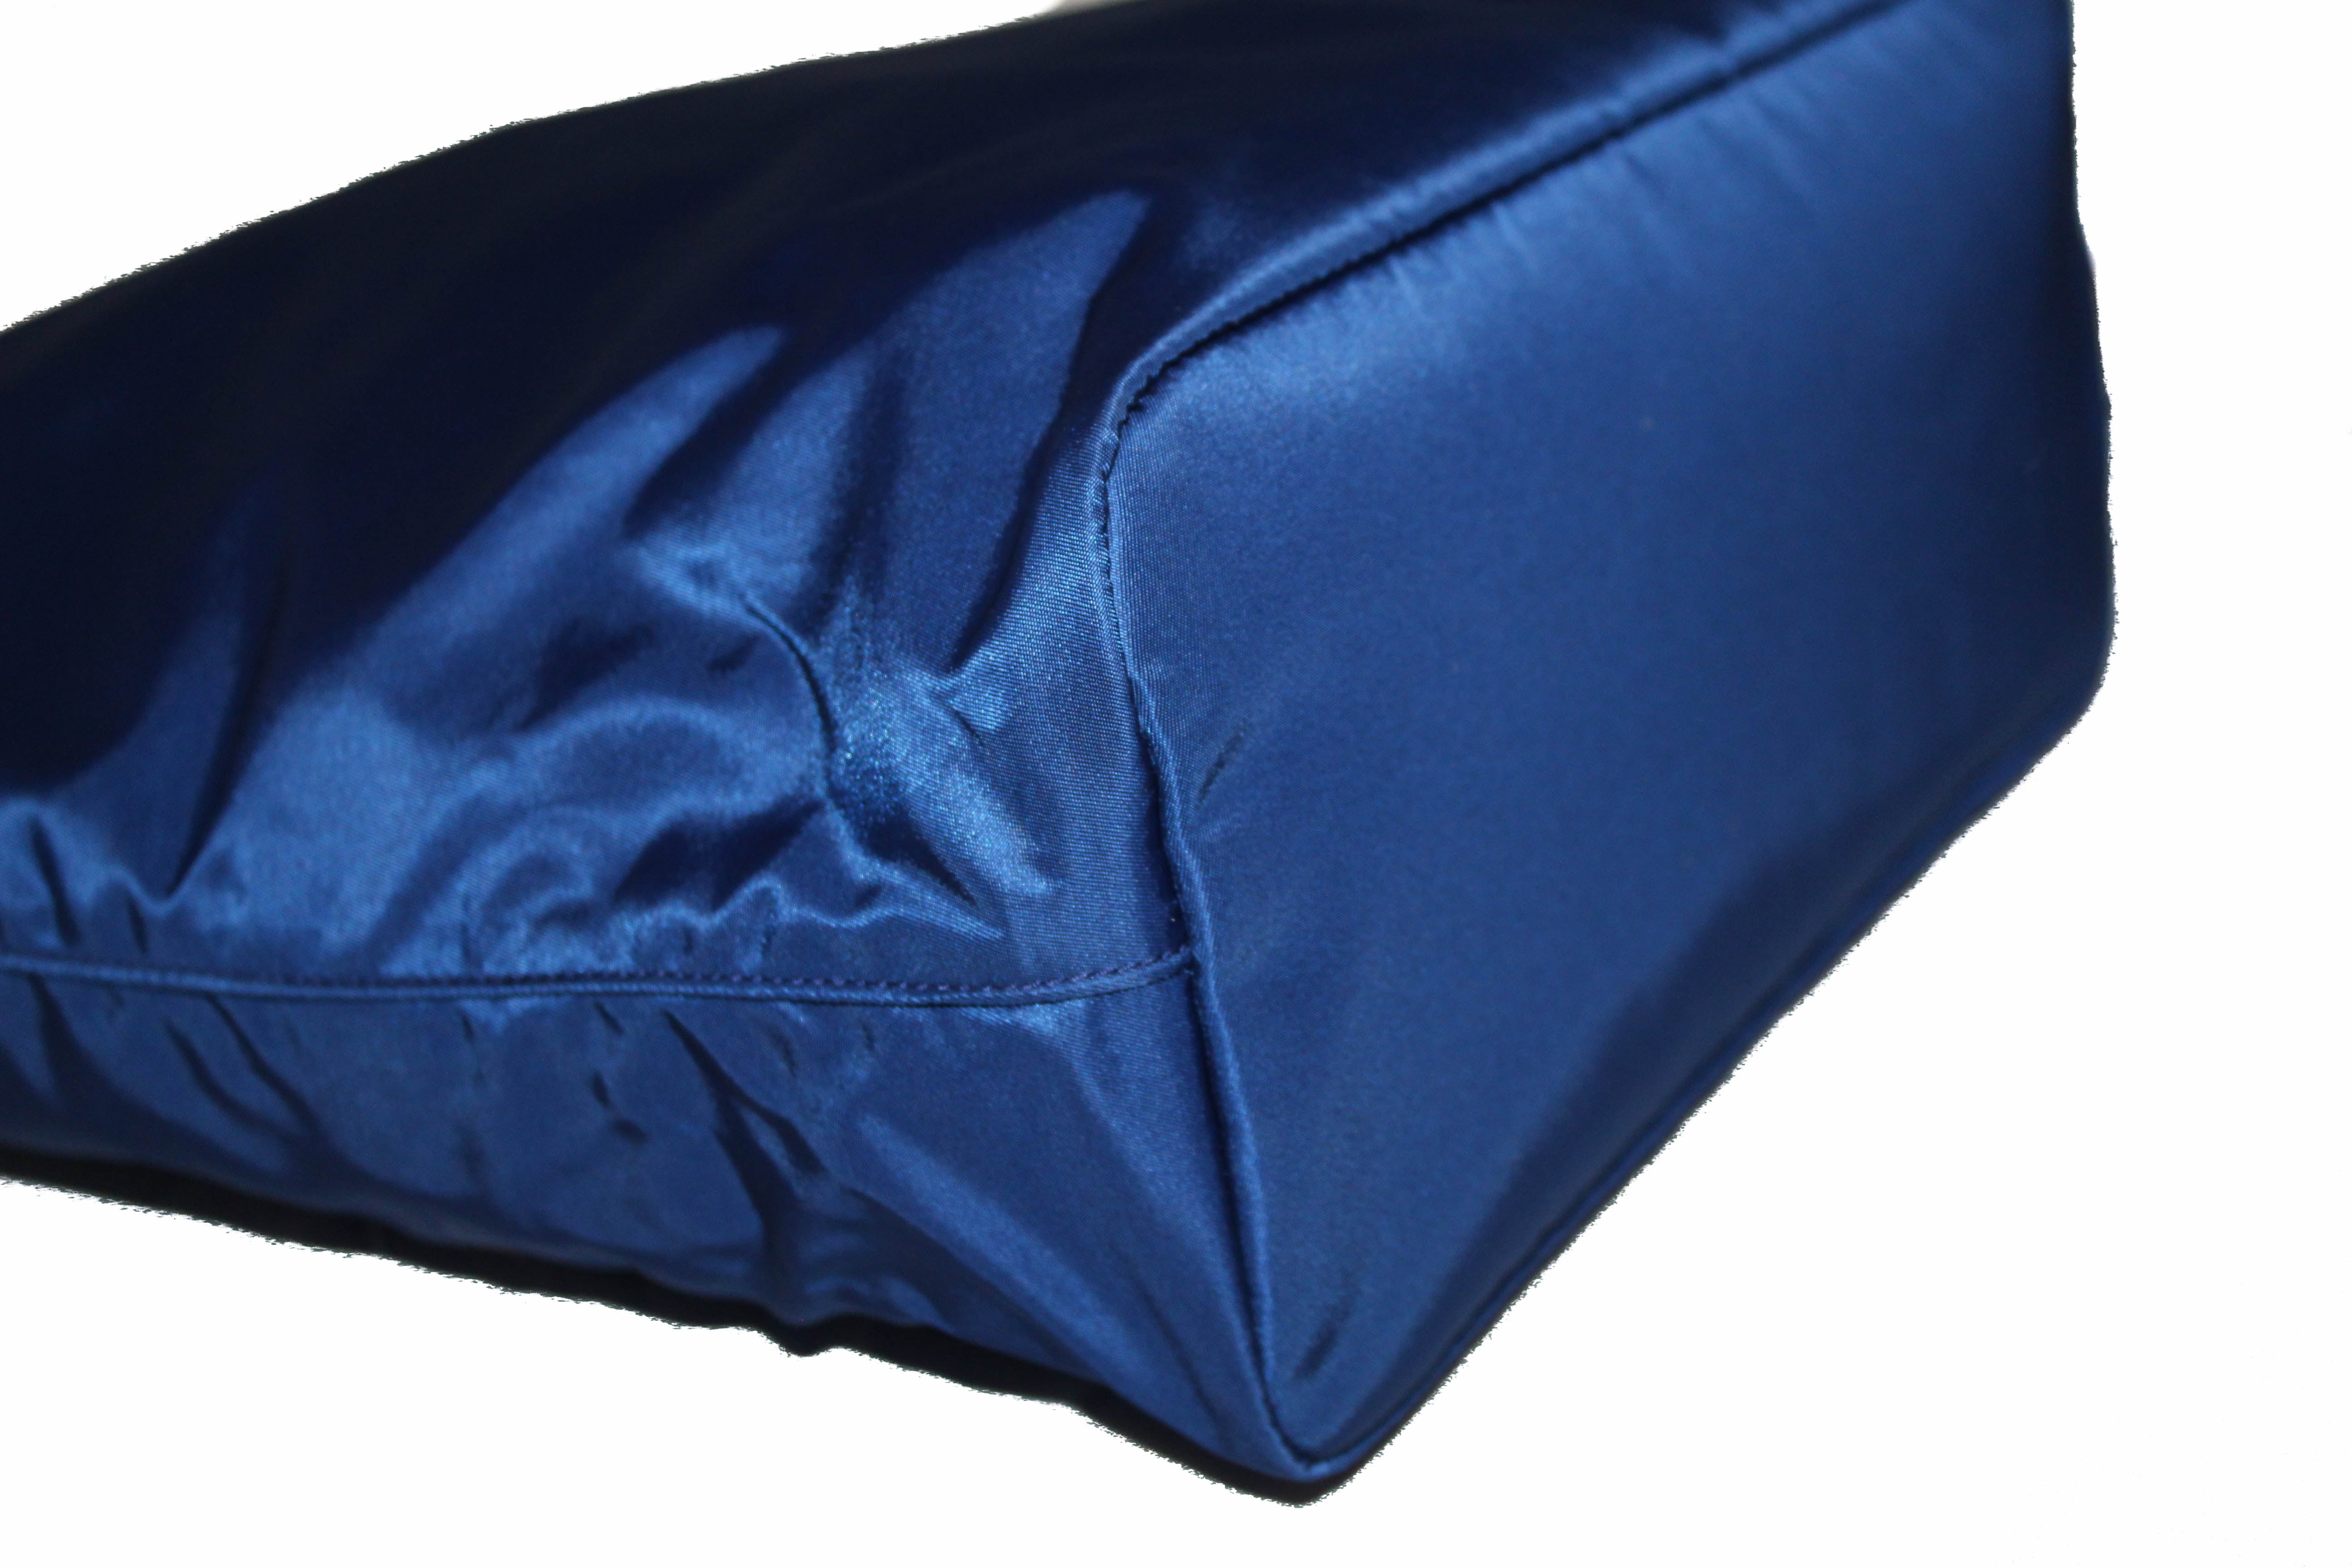 Prada Tessuto Nylon Saffiano Leather Tote Bag Blue